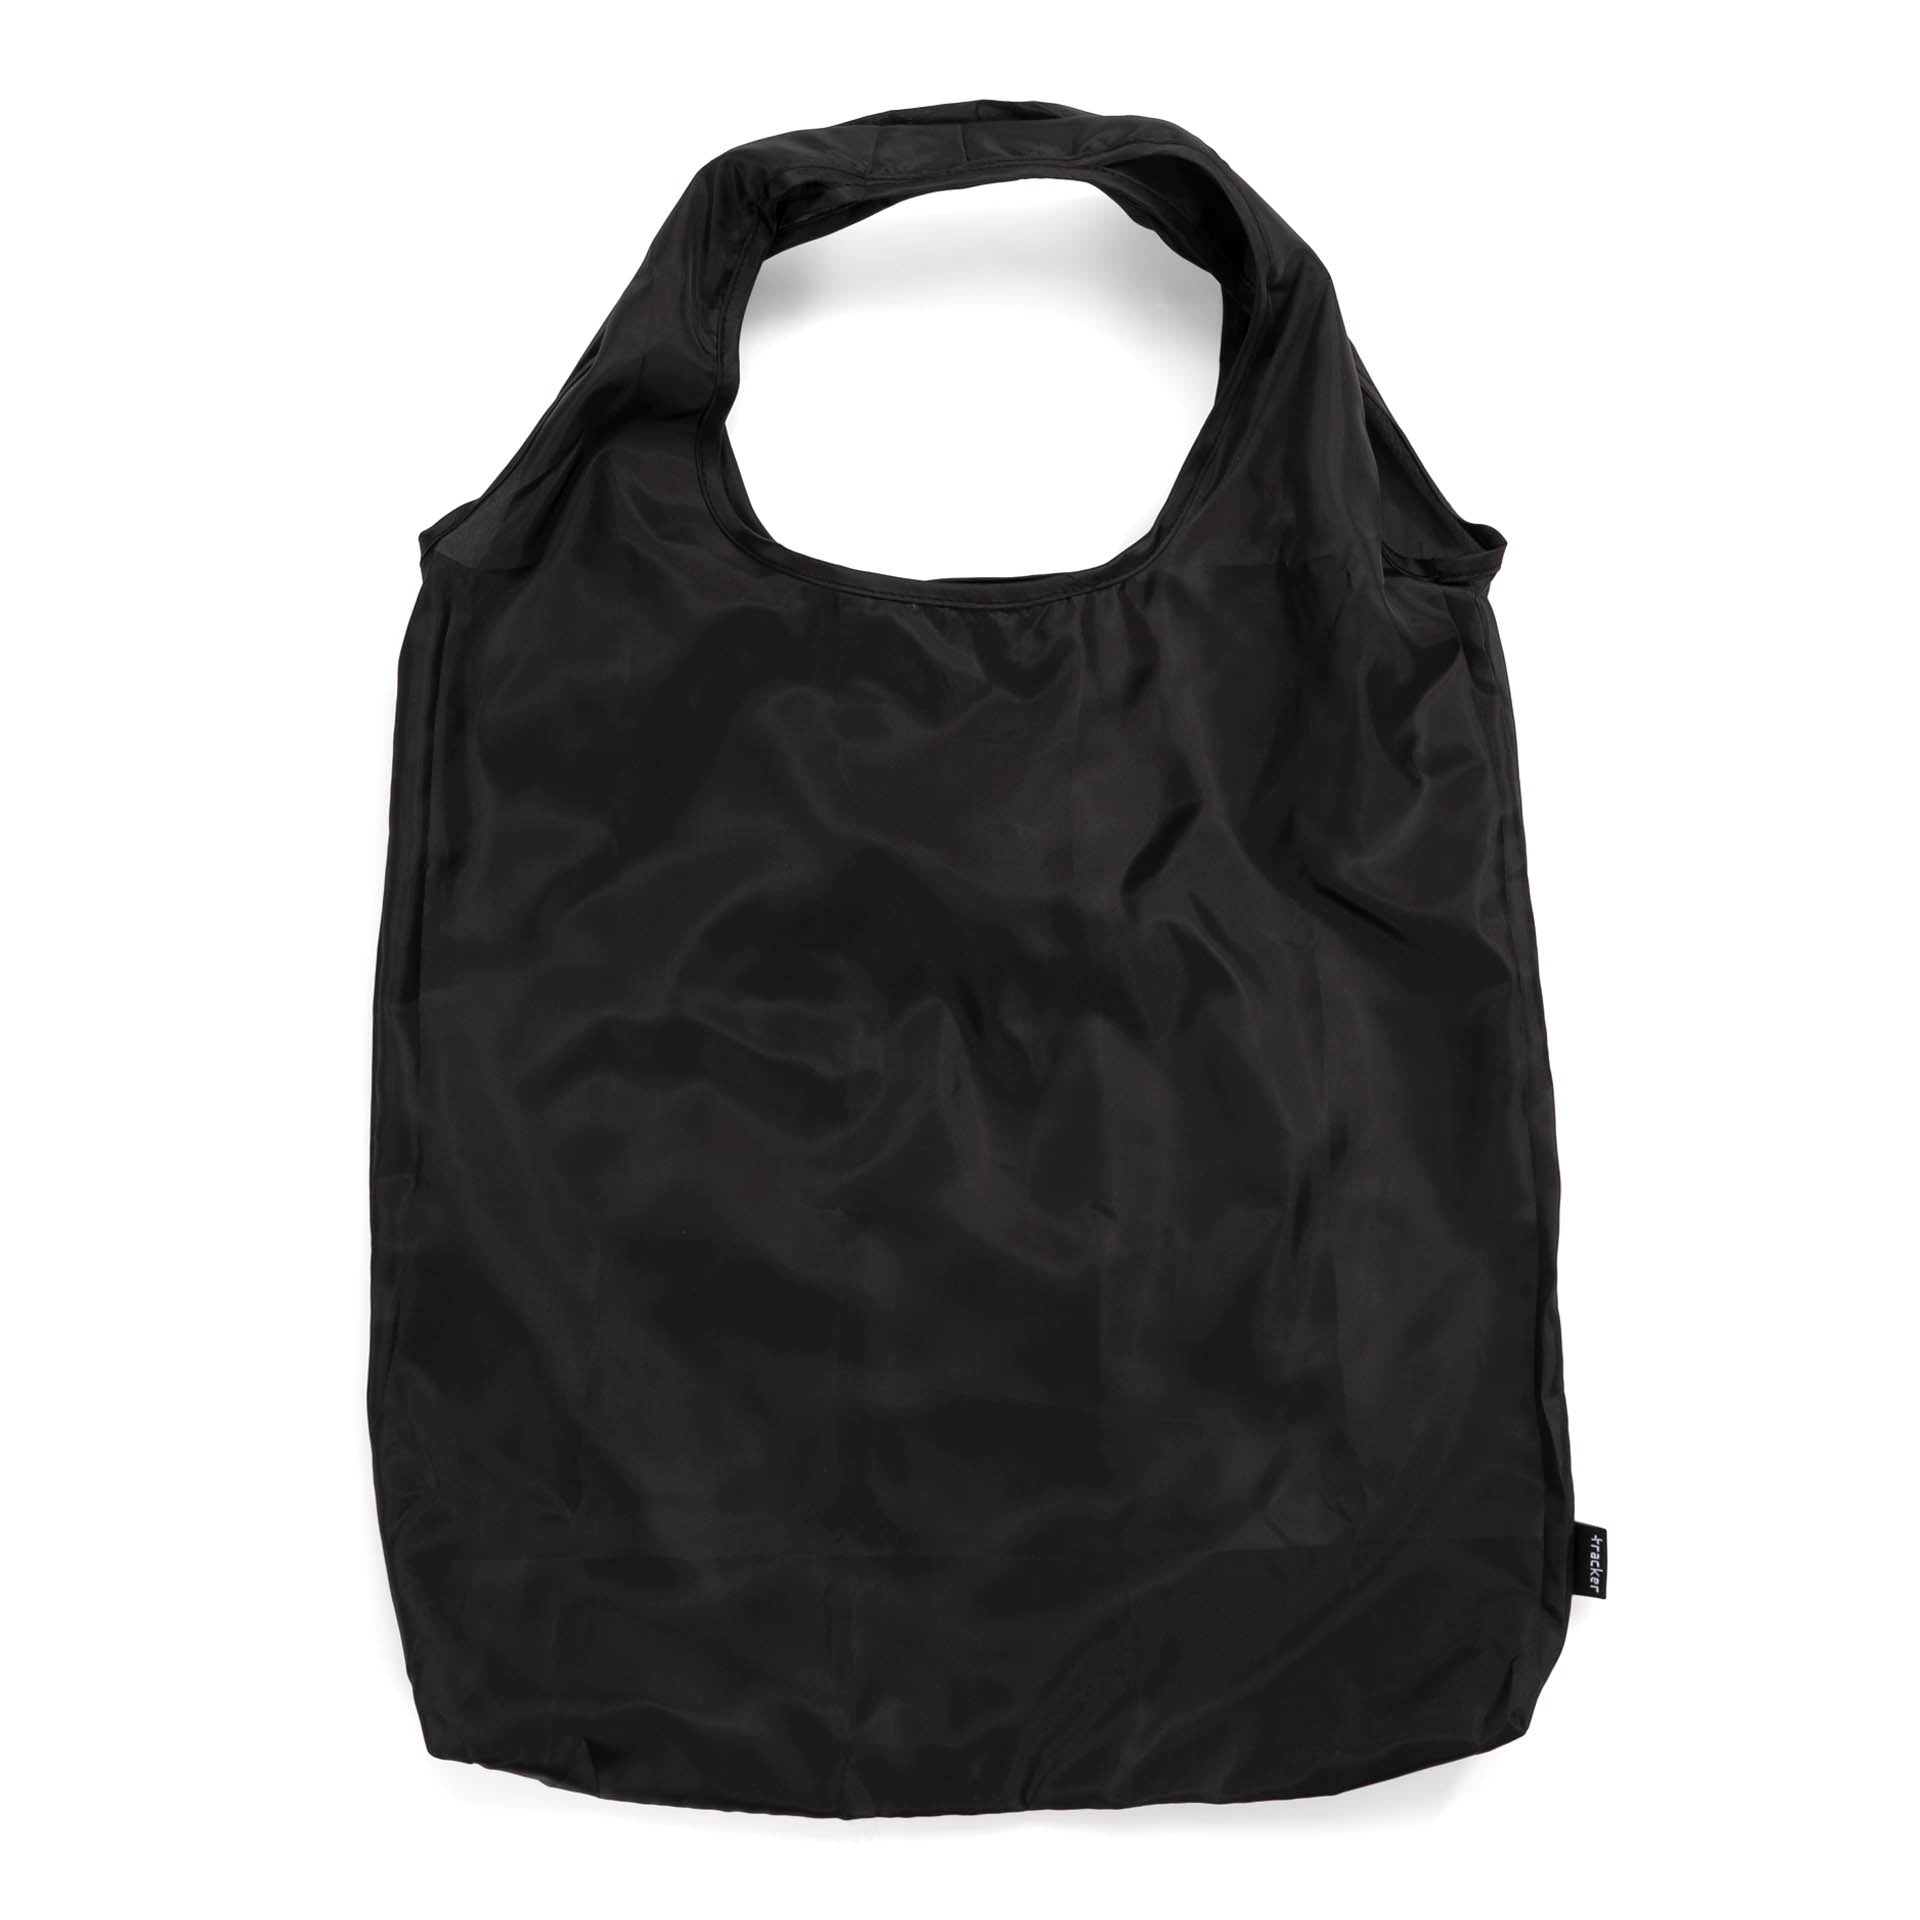 Solid Black Reusable Bag